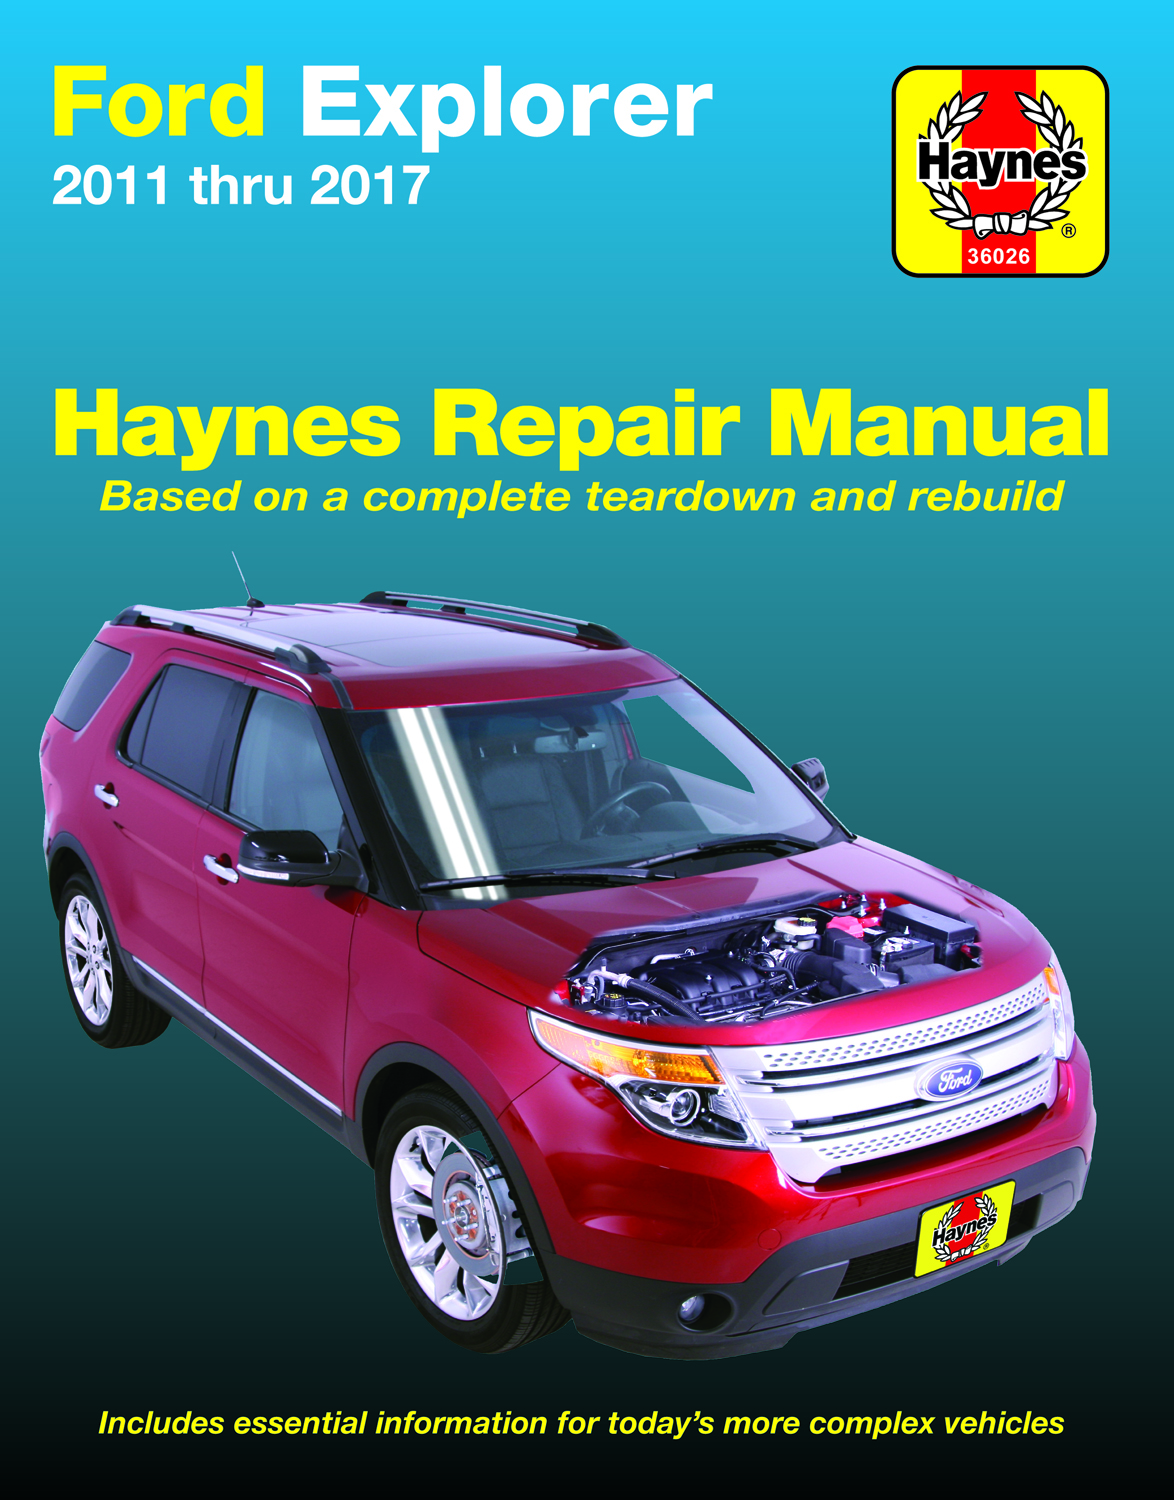 11-17 Ford Explorer shop service repair manual by Haynes